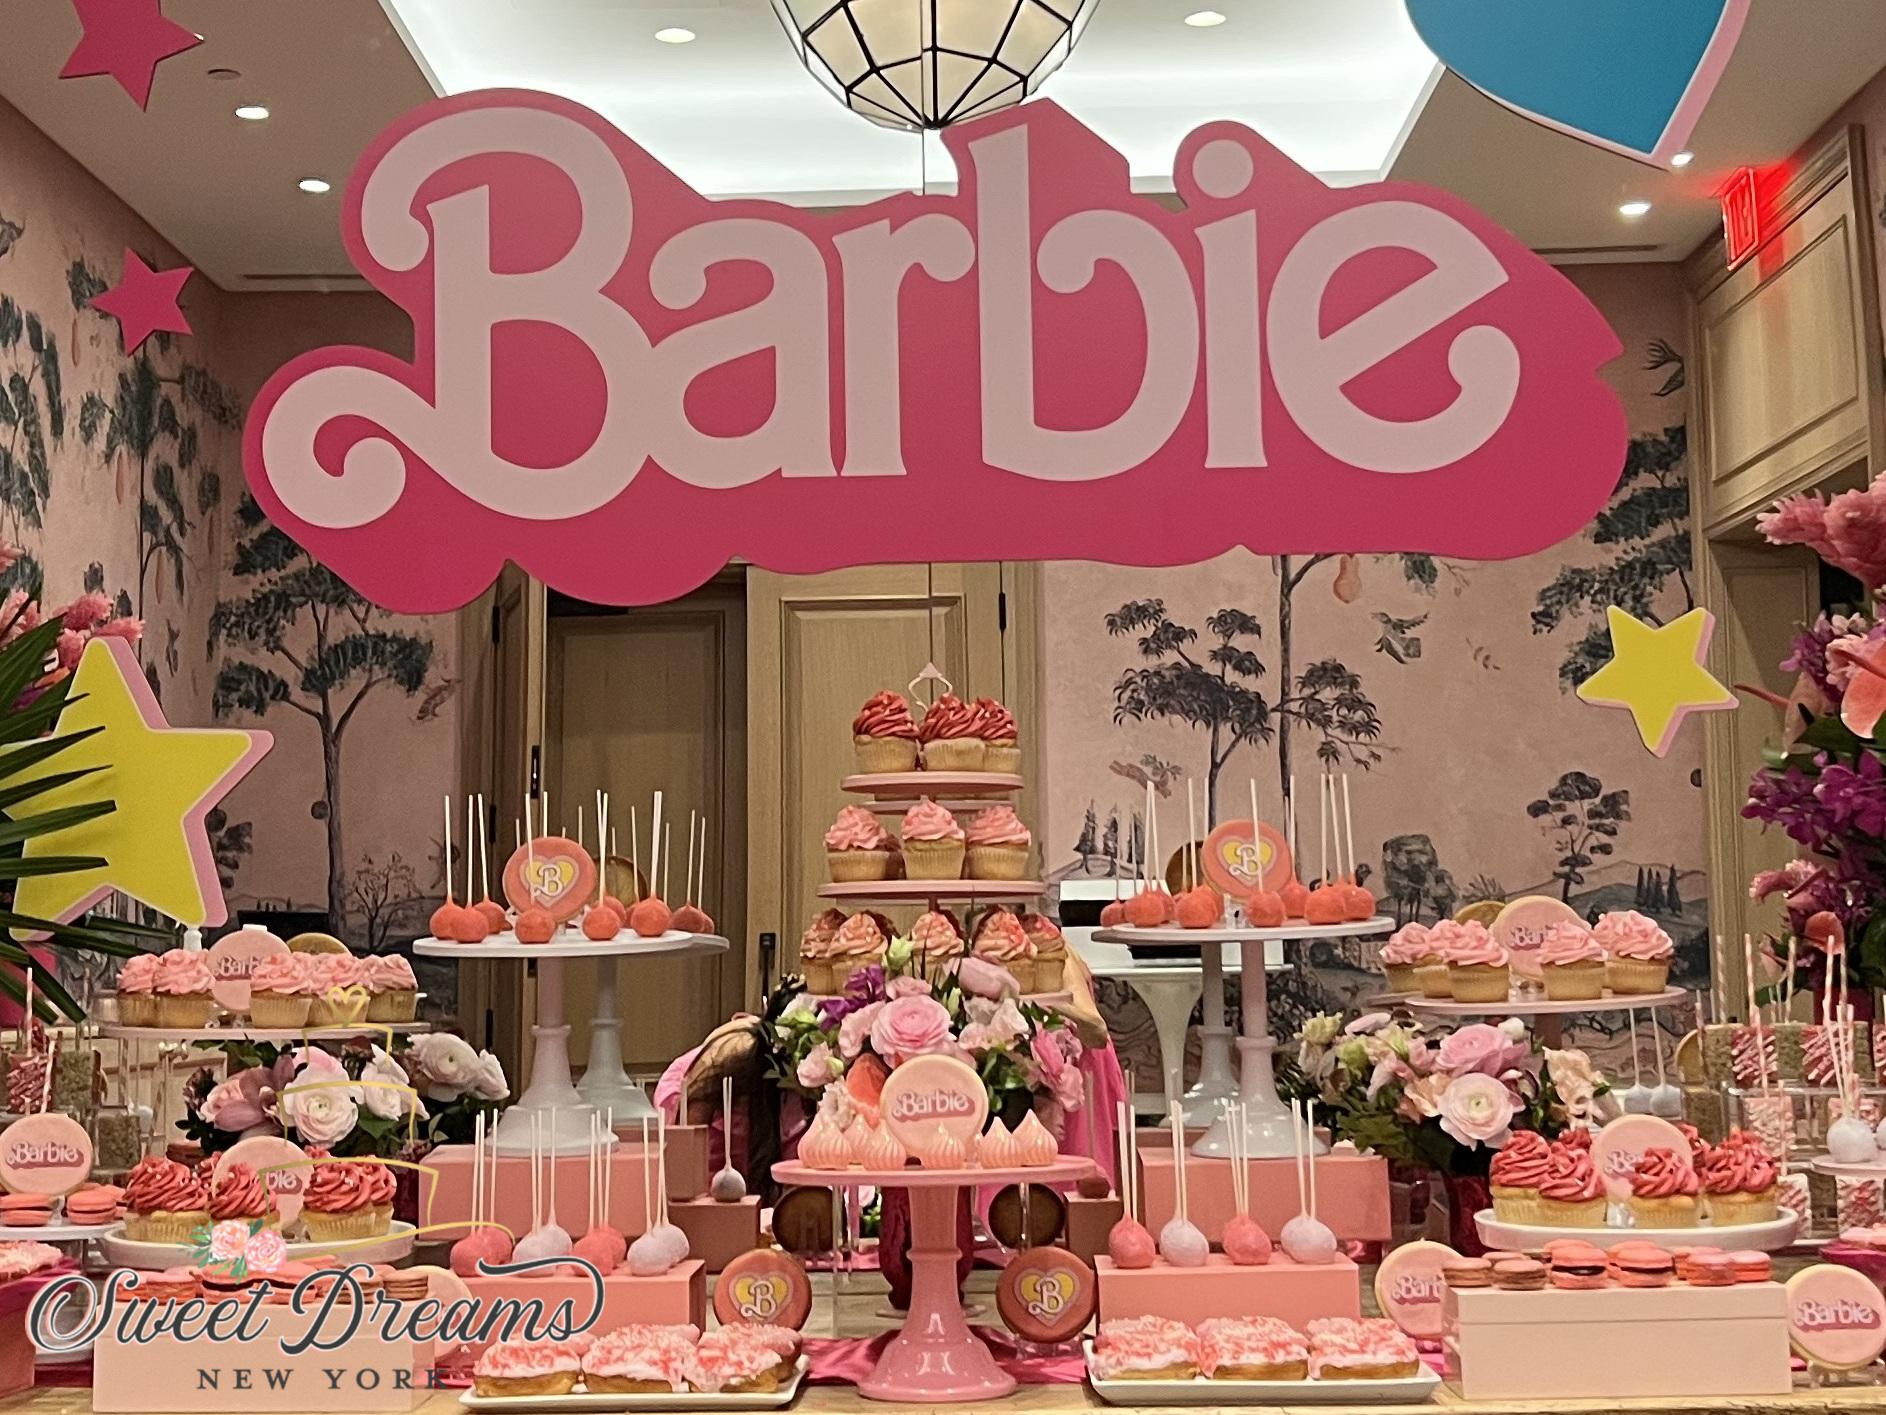 NYC Dessert Table Barbie NYC Long Island dessert table Barbie birthday Pink Bridal Shower pink Dessert table